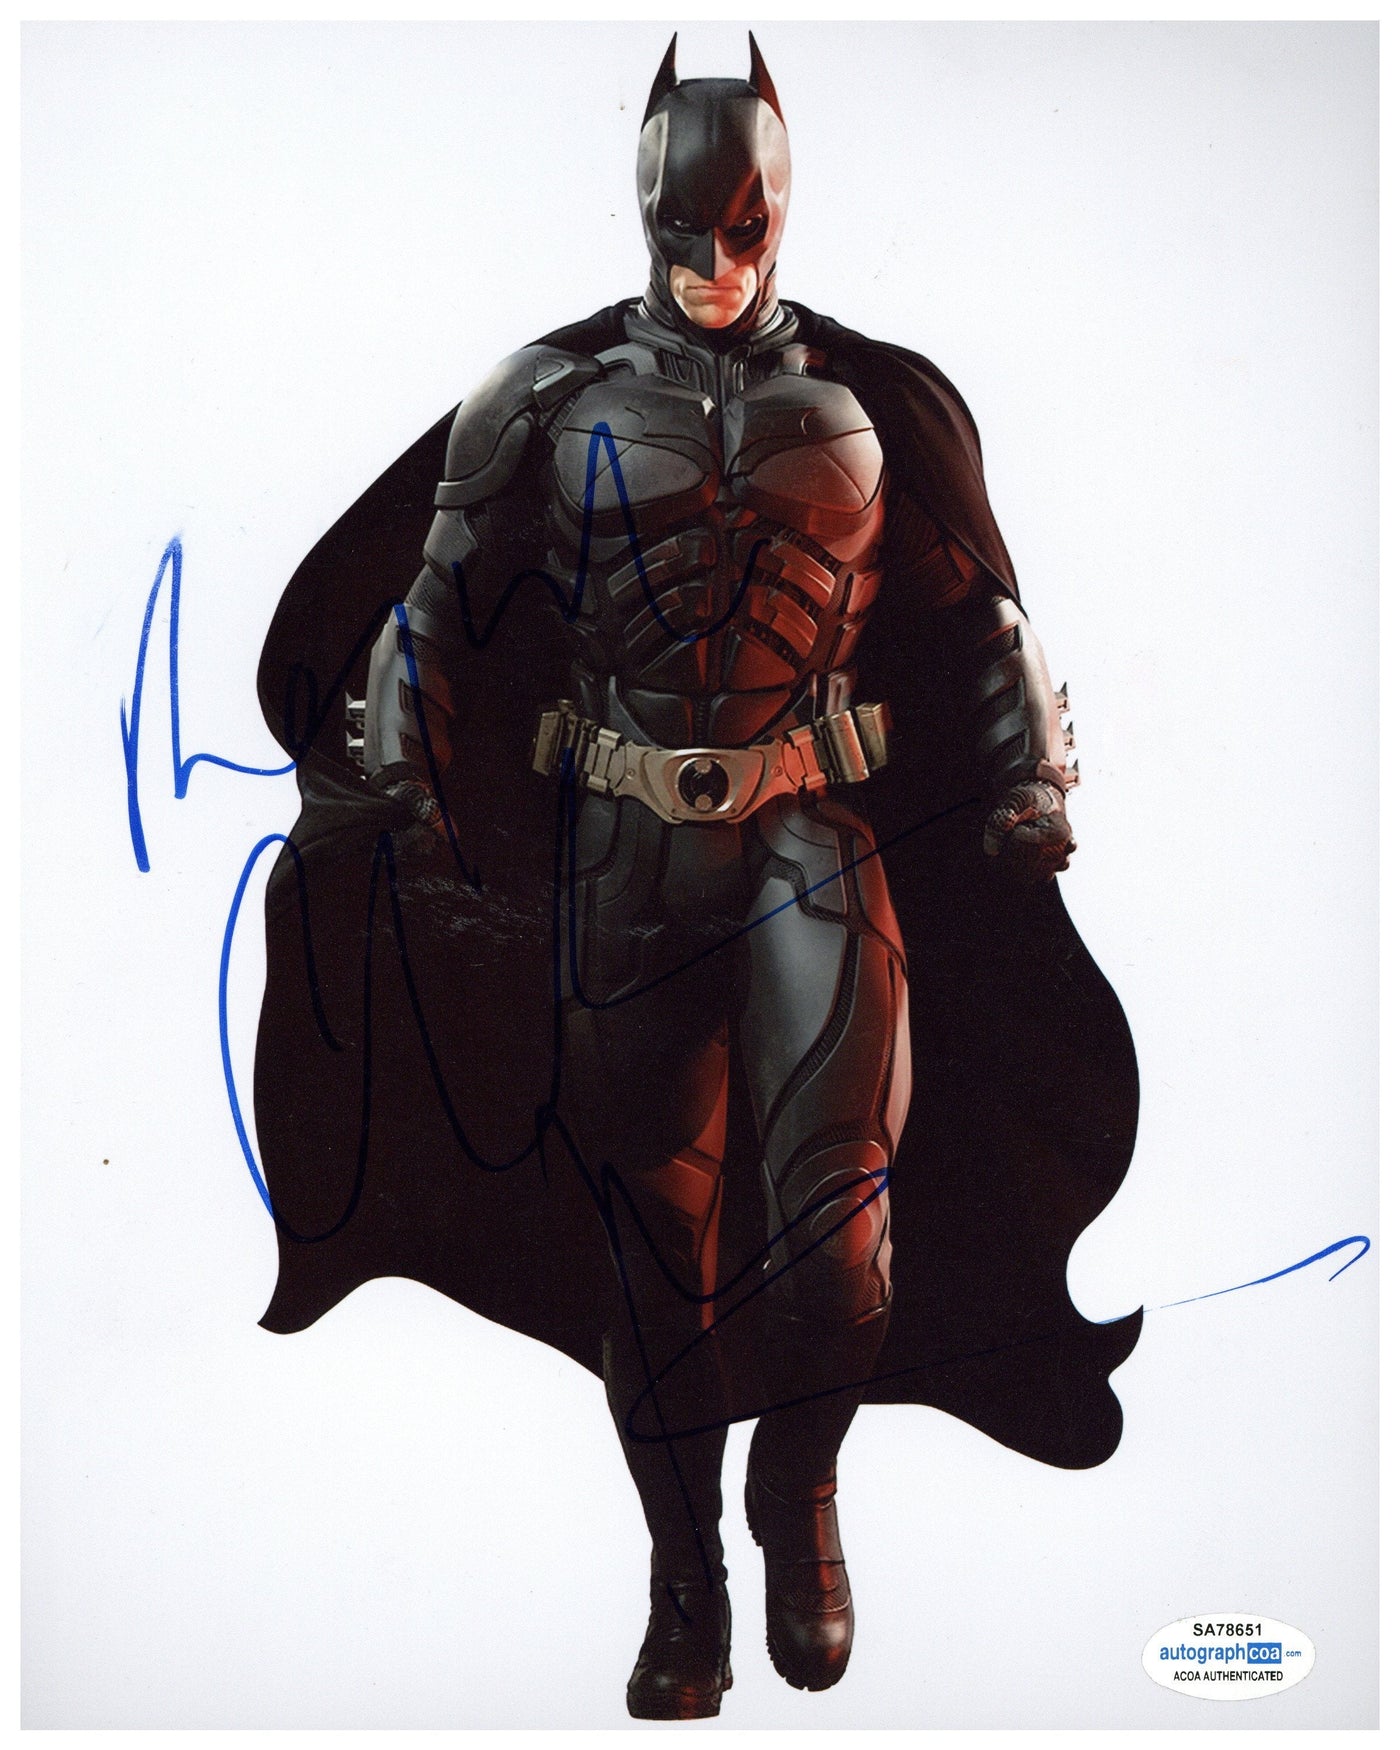 Christian Bale Signed 8x10 Photo The Dark Knight Autographed ACOA